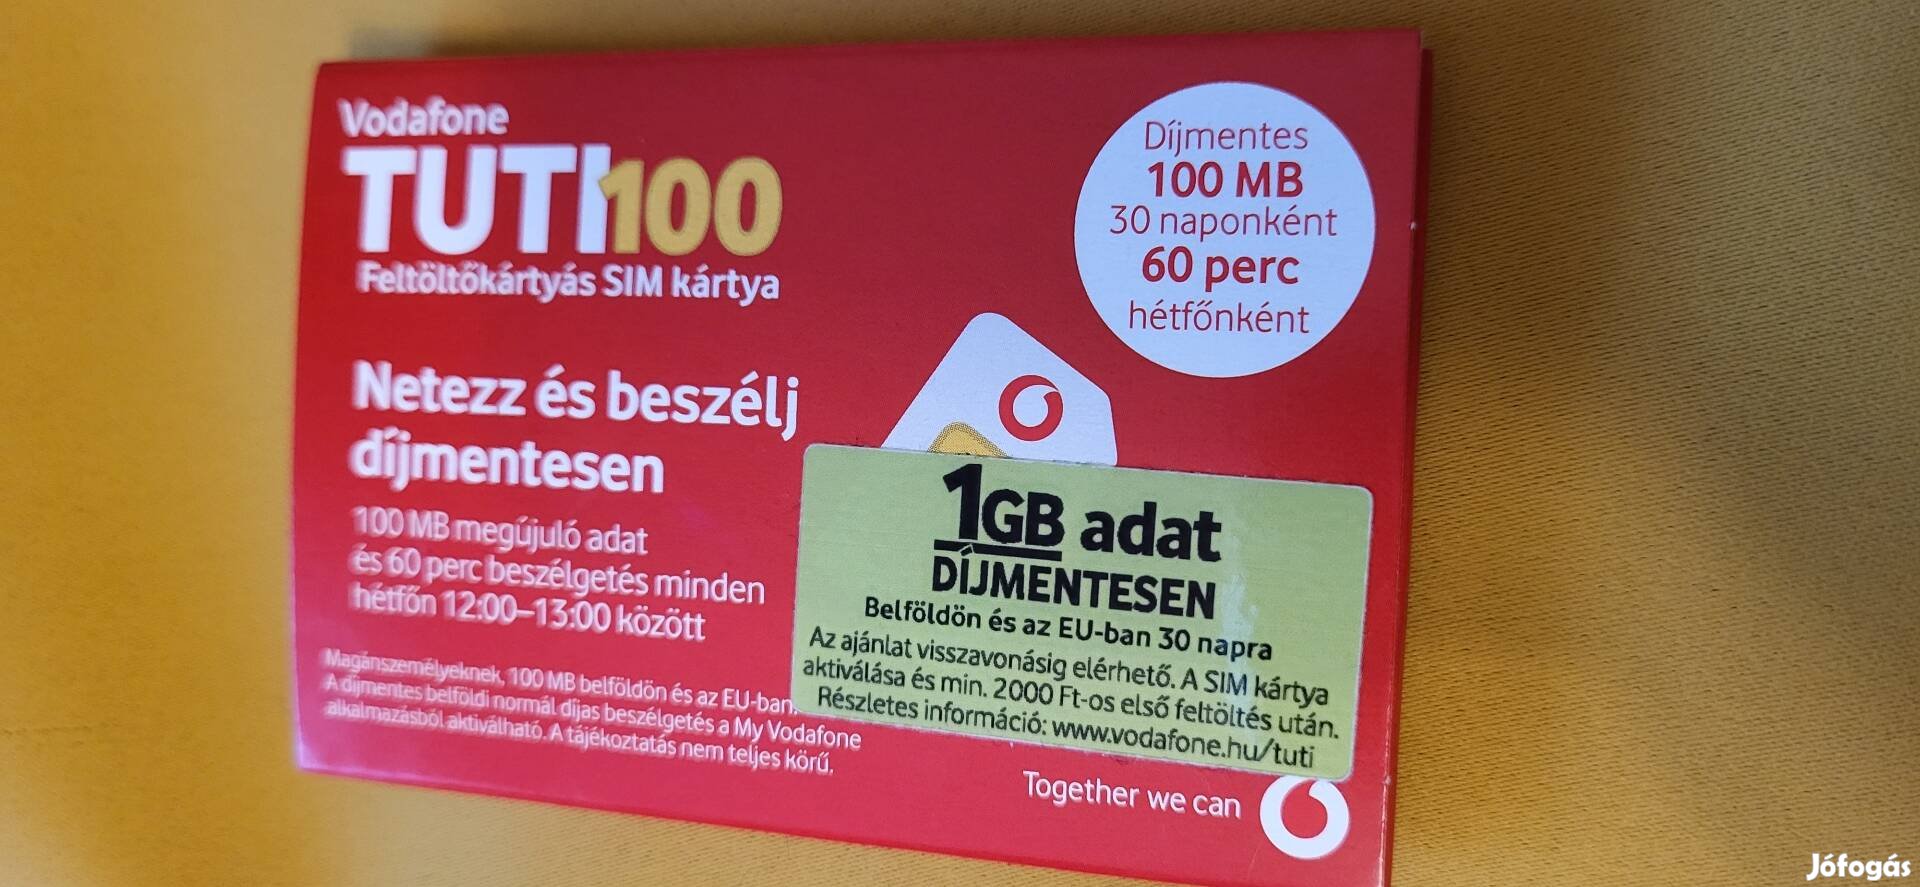 Tutti 100 Vodafone sim/feltöltőkártya, bontatlan.